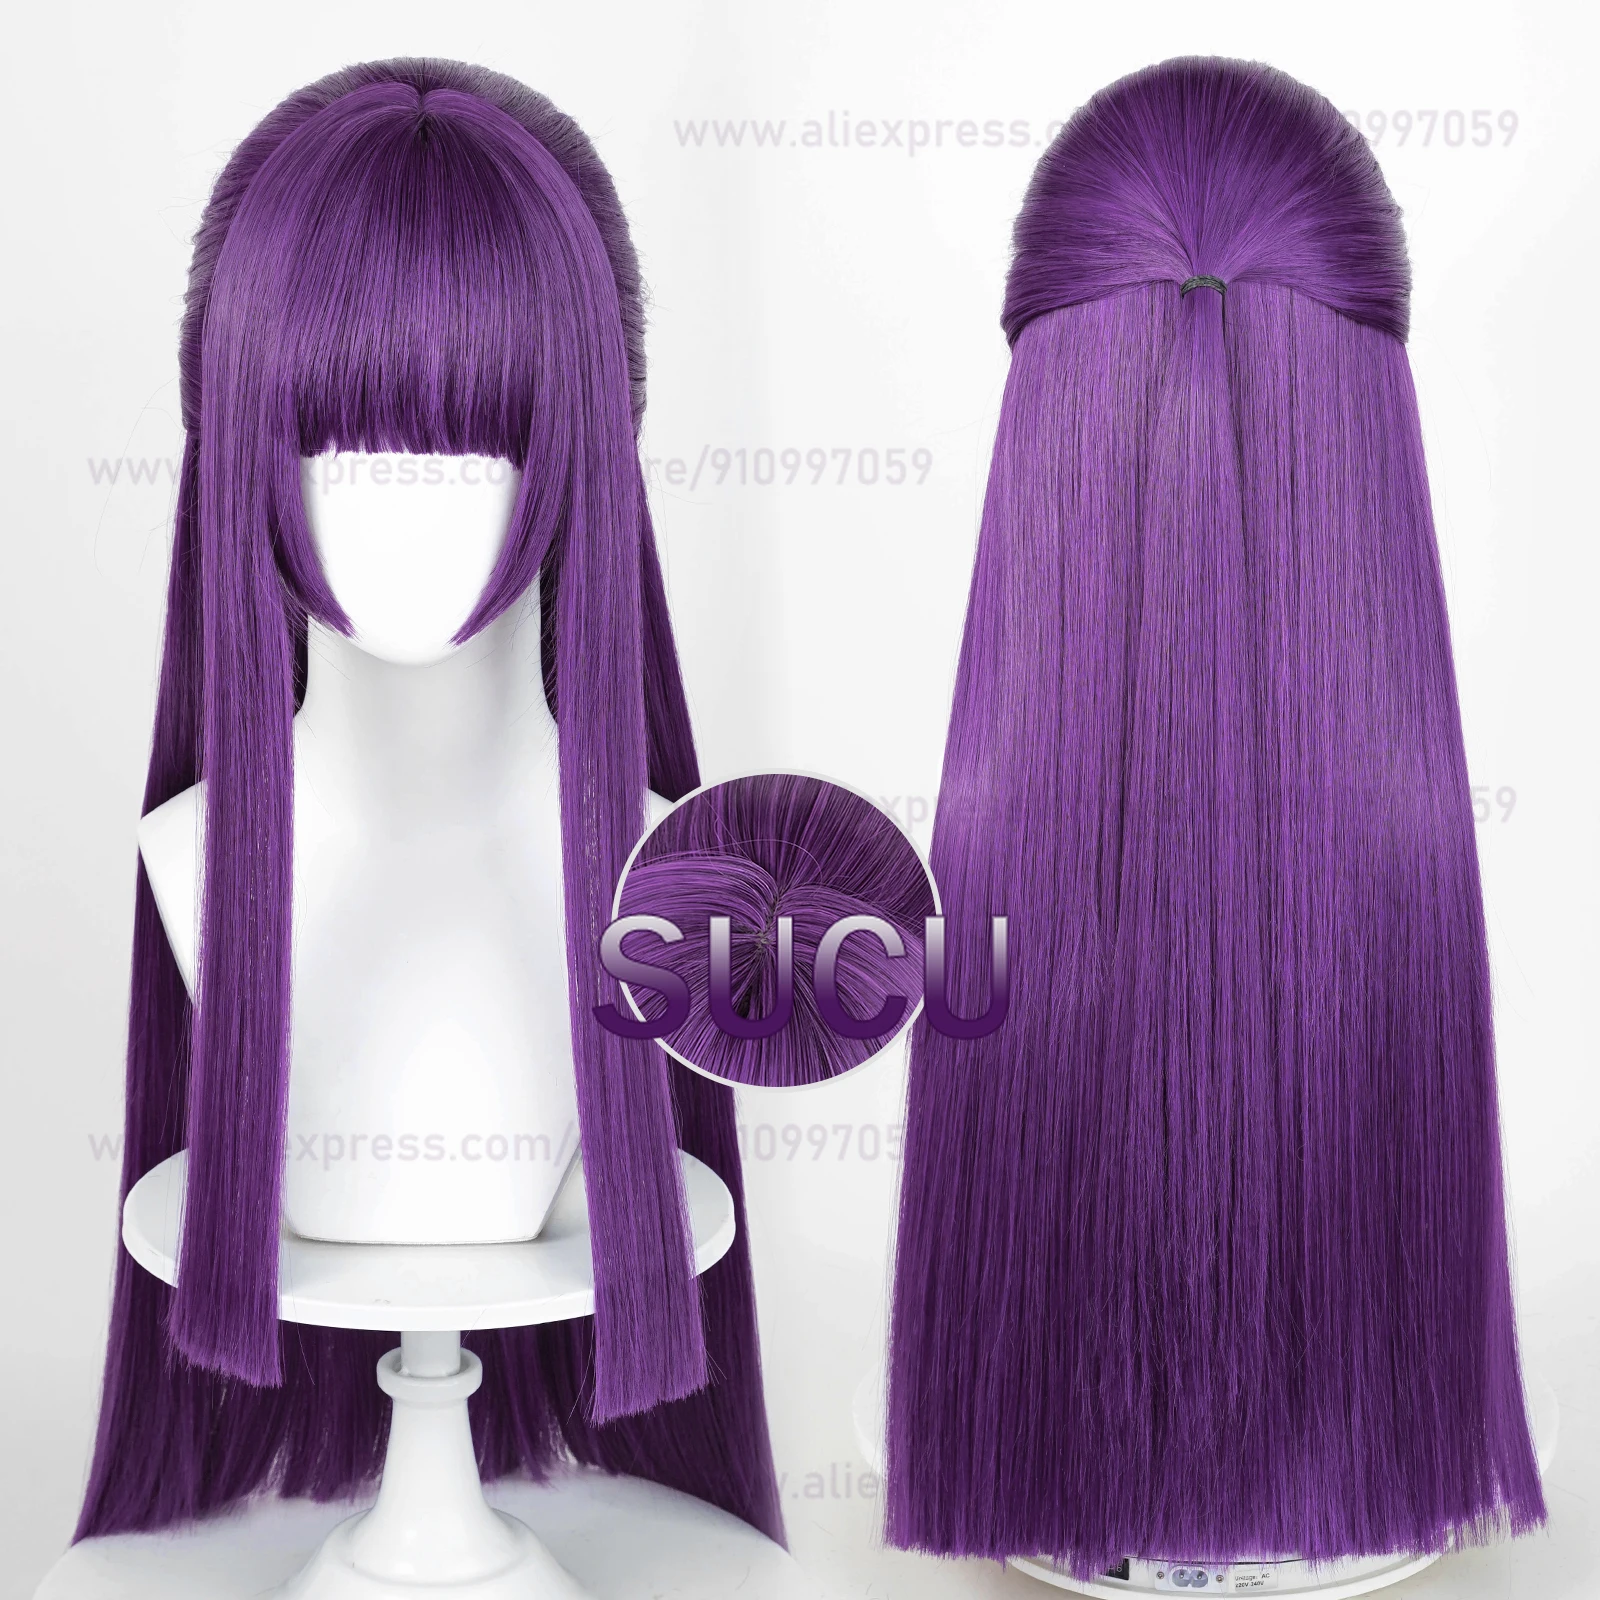 Anime Farn Cosplay Perücke 80cm lila glattes Haar Halloween hitze beständige synthetische Perücken Perücke Kappe